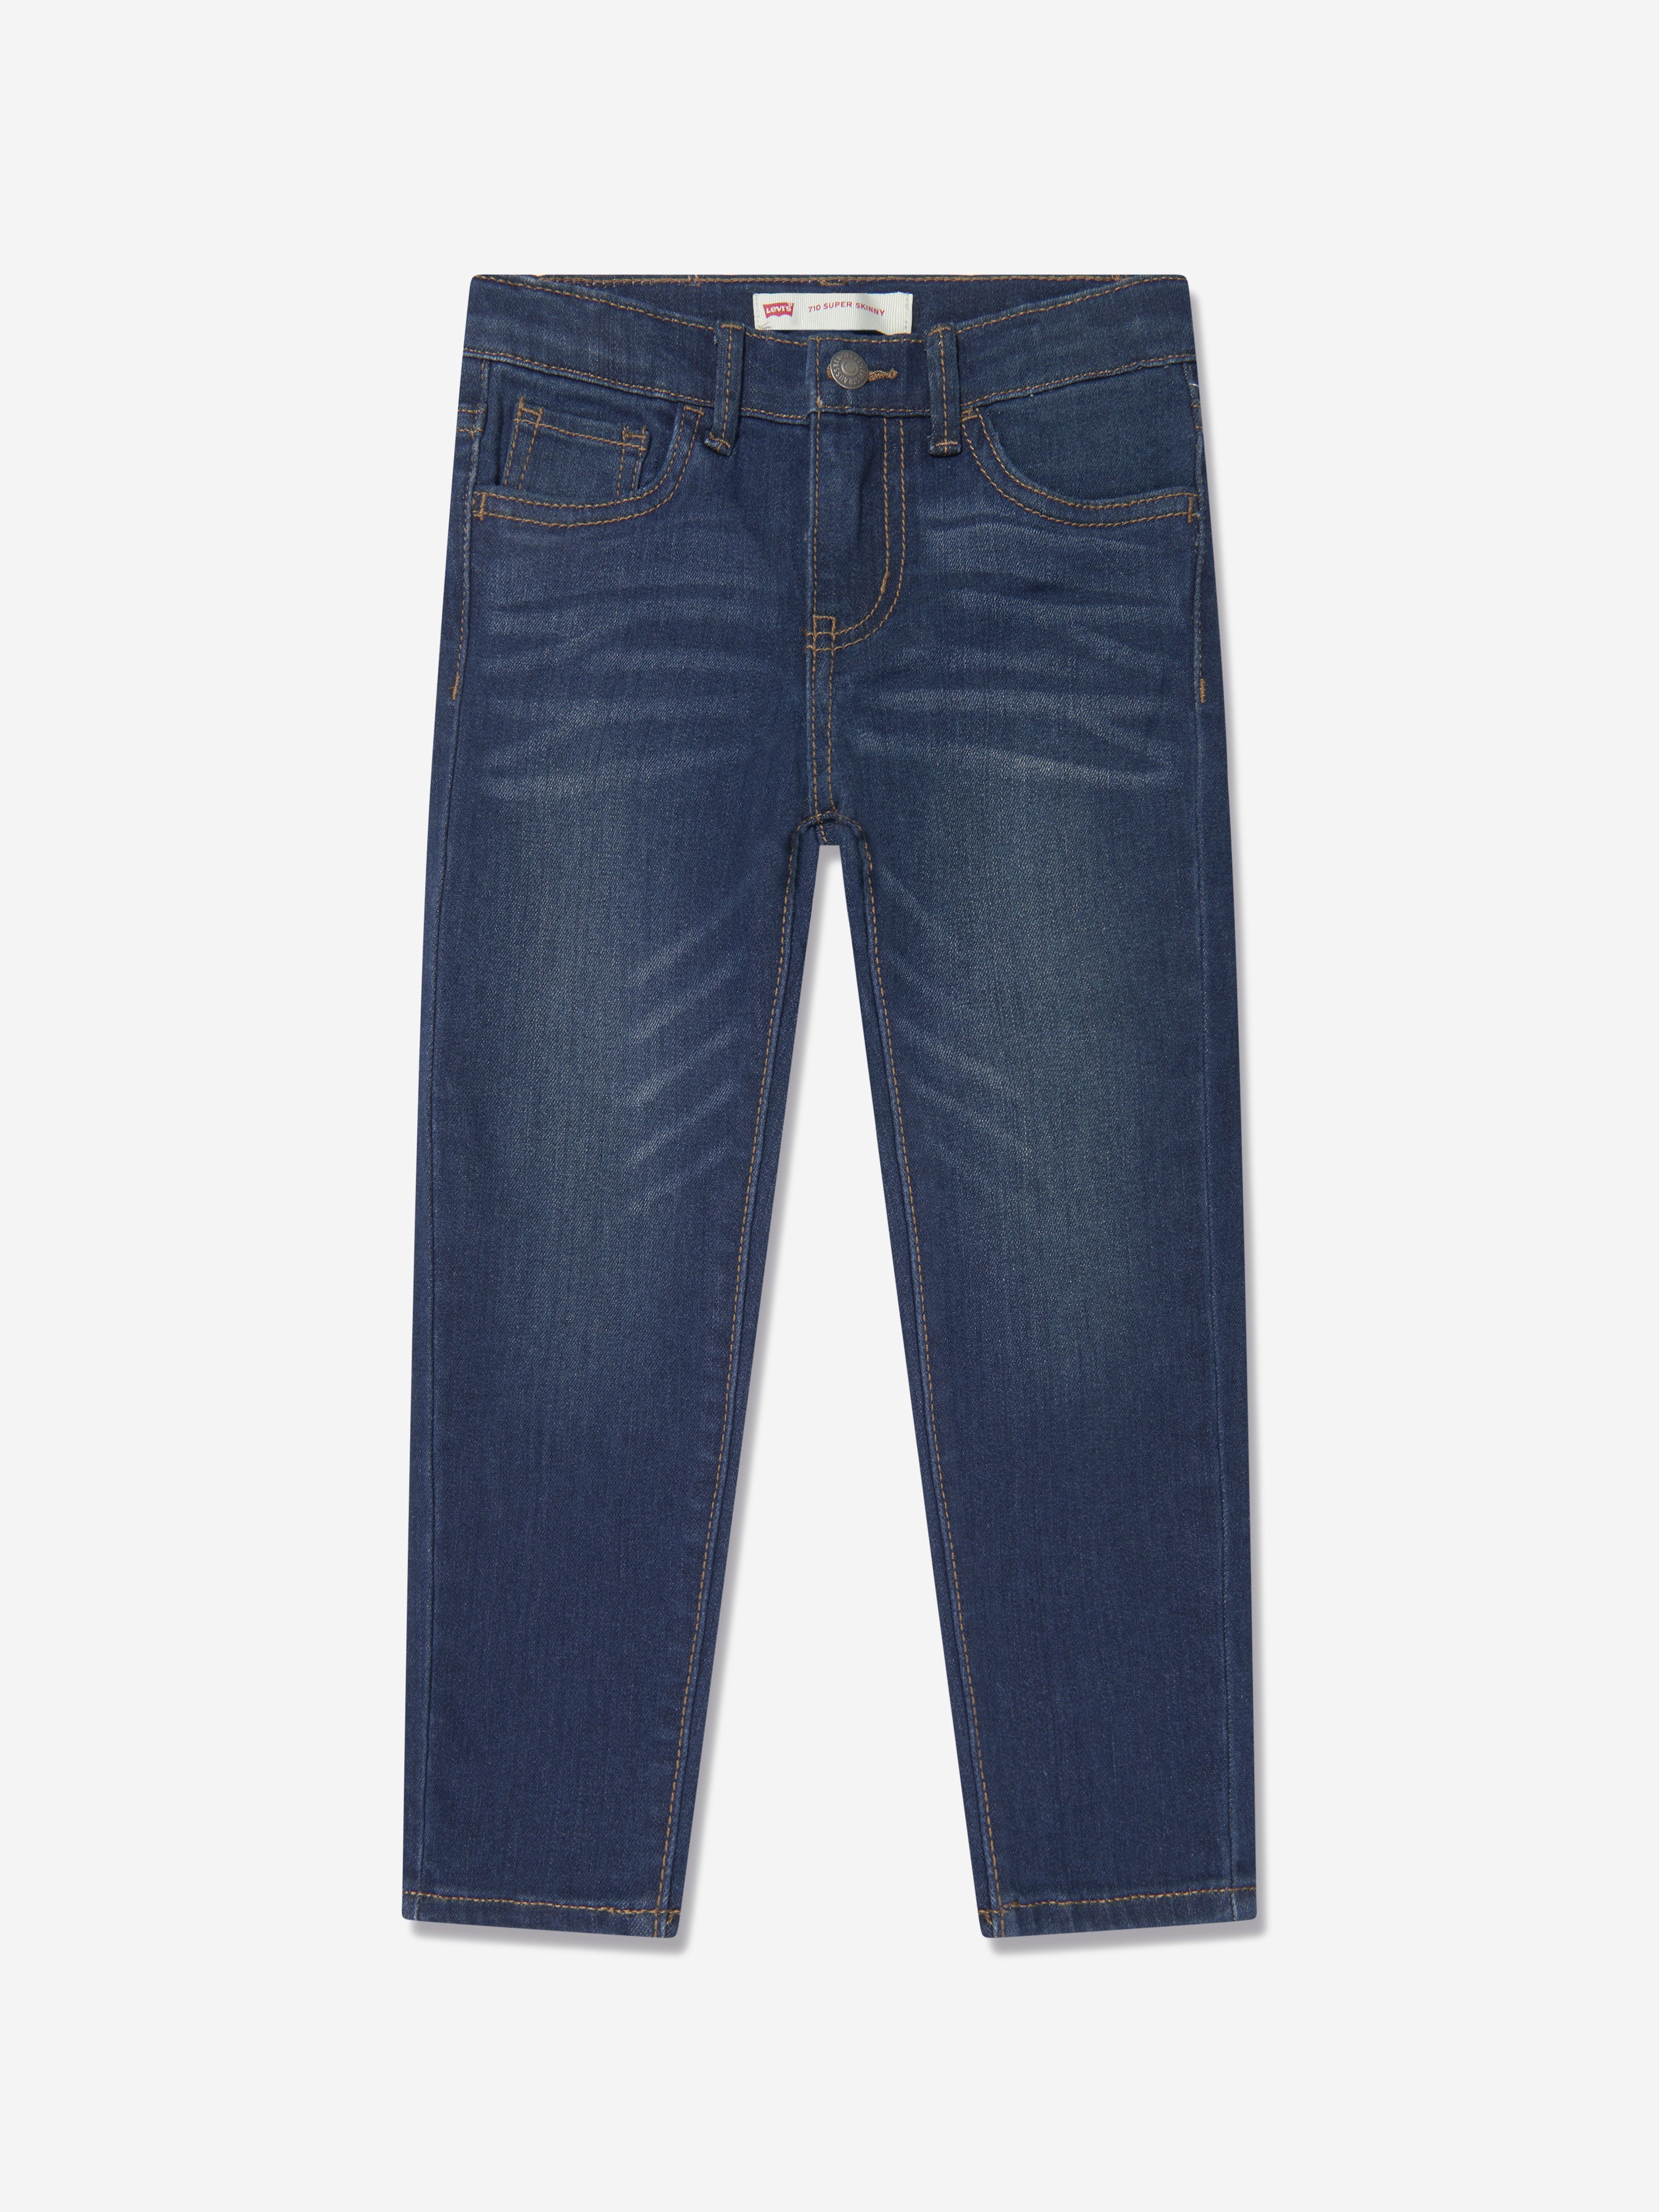 Levi's Wear Babies' Girls 710 Super Skinny Jeans 8 Yrs Blue